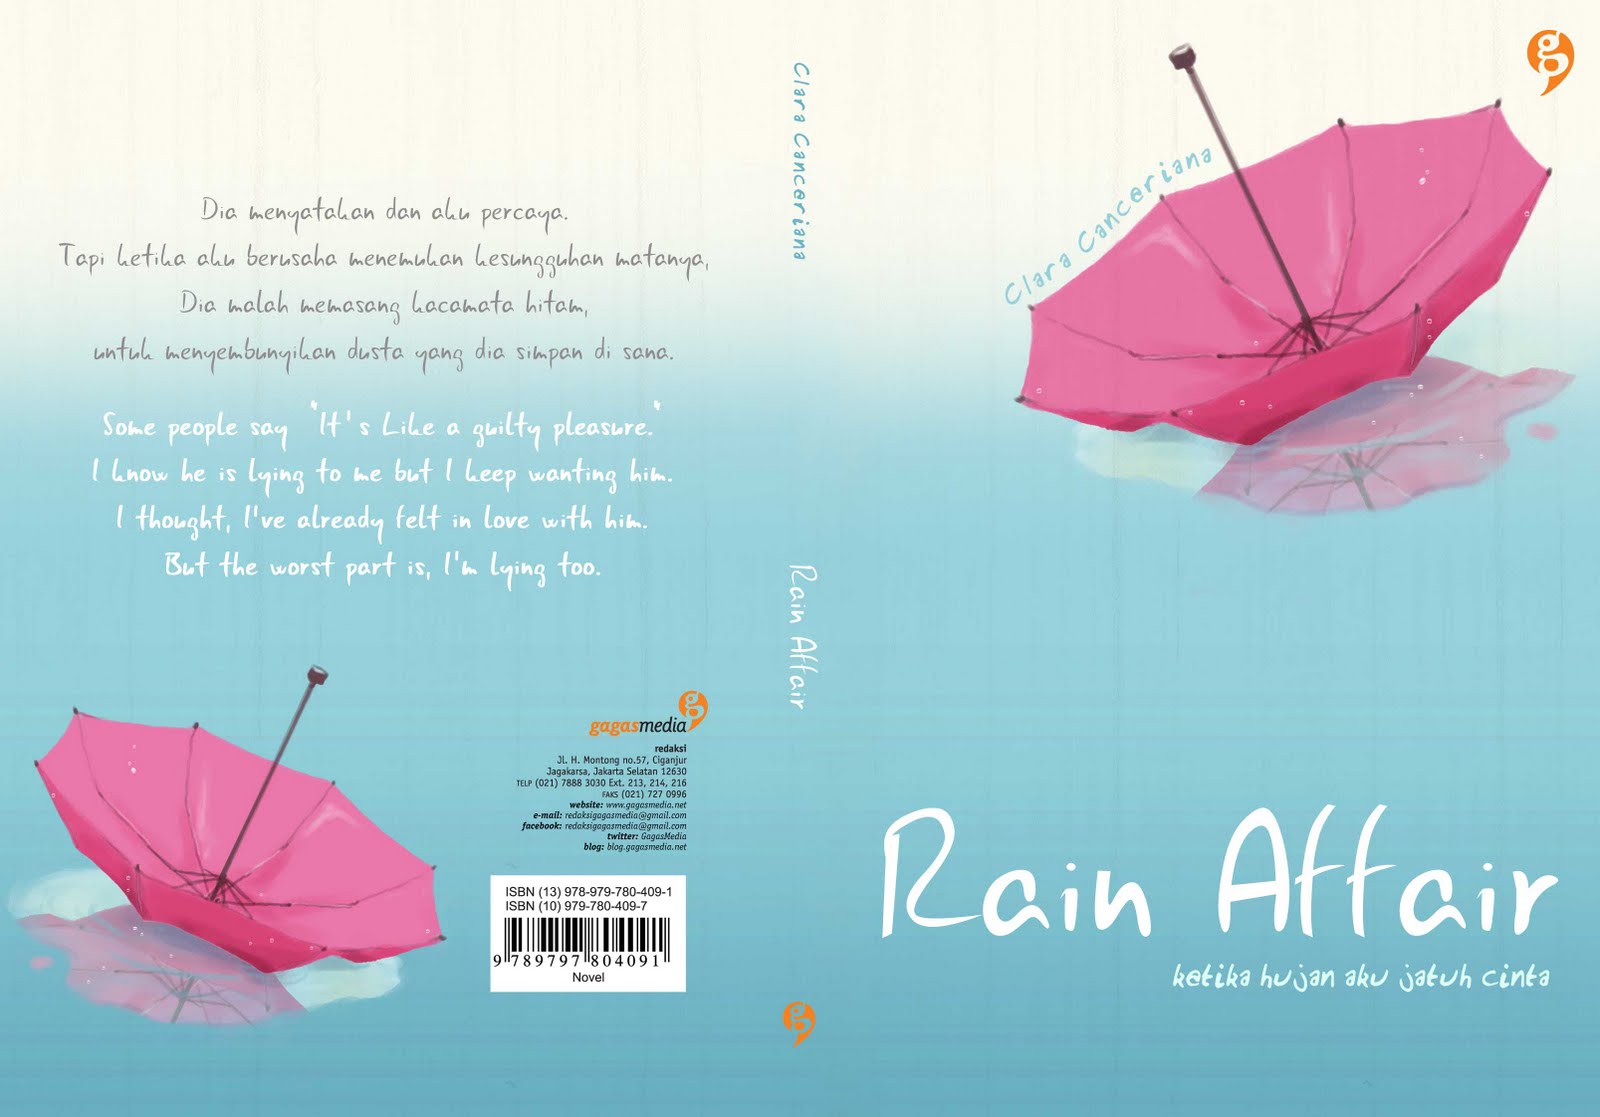 Cerita Anak Hujan Tentang Novel "Rain Affair"